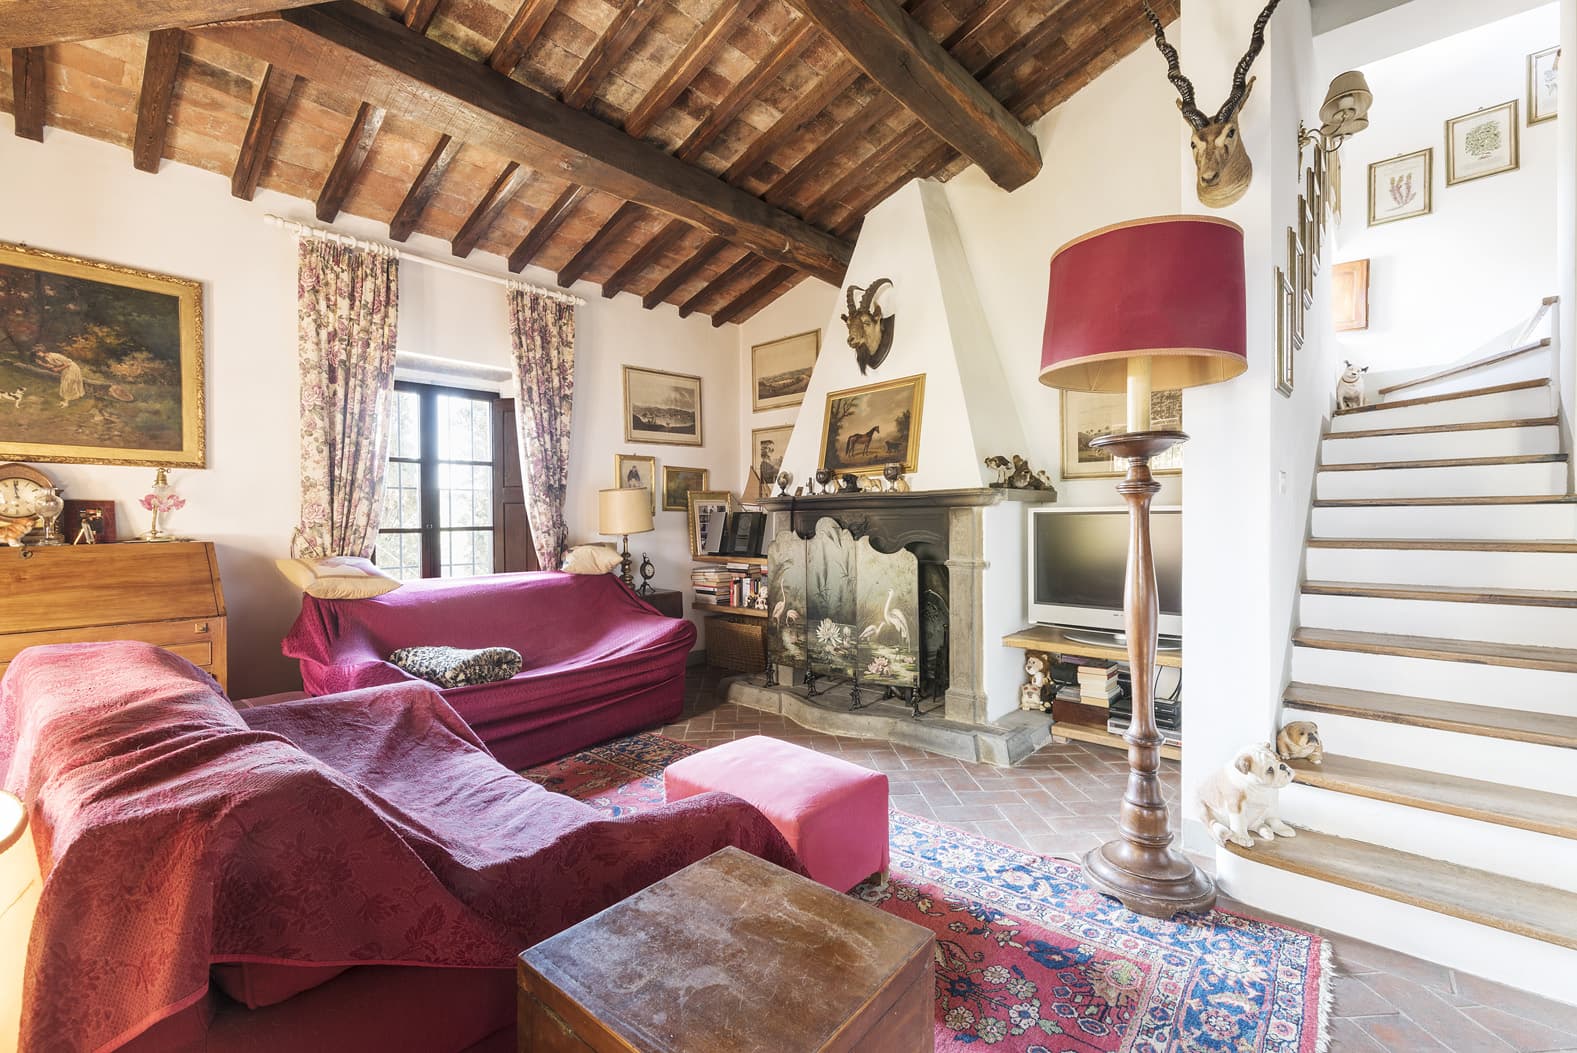  Bedroom Villa For Sale Borgo In Chianti Lp0793 197af385ec809900.jpg